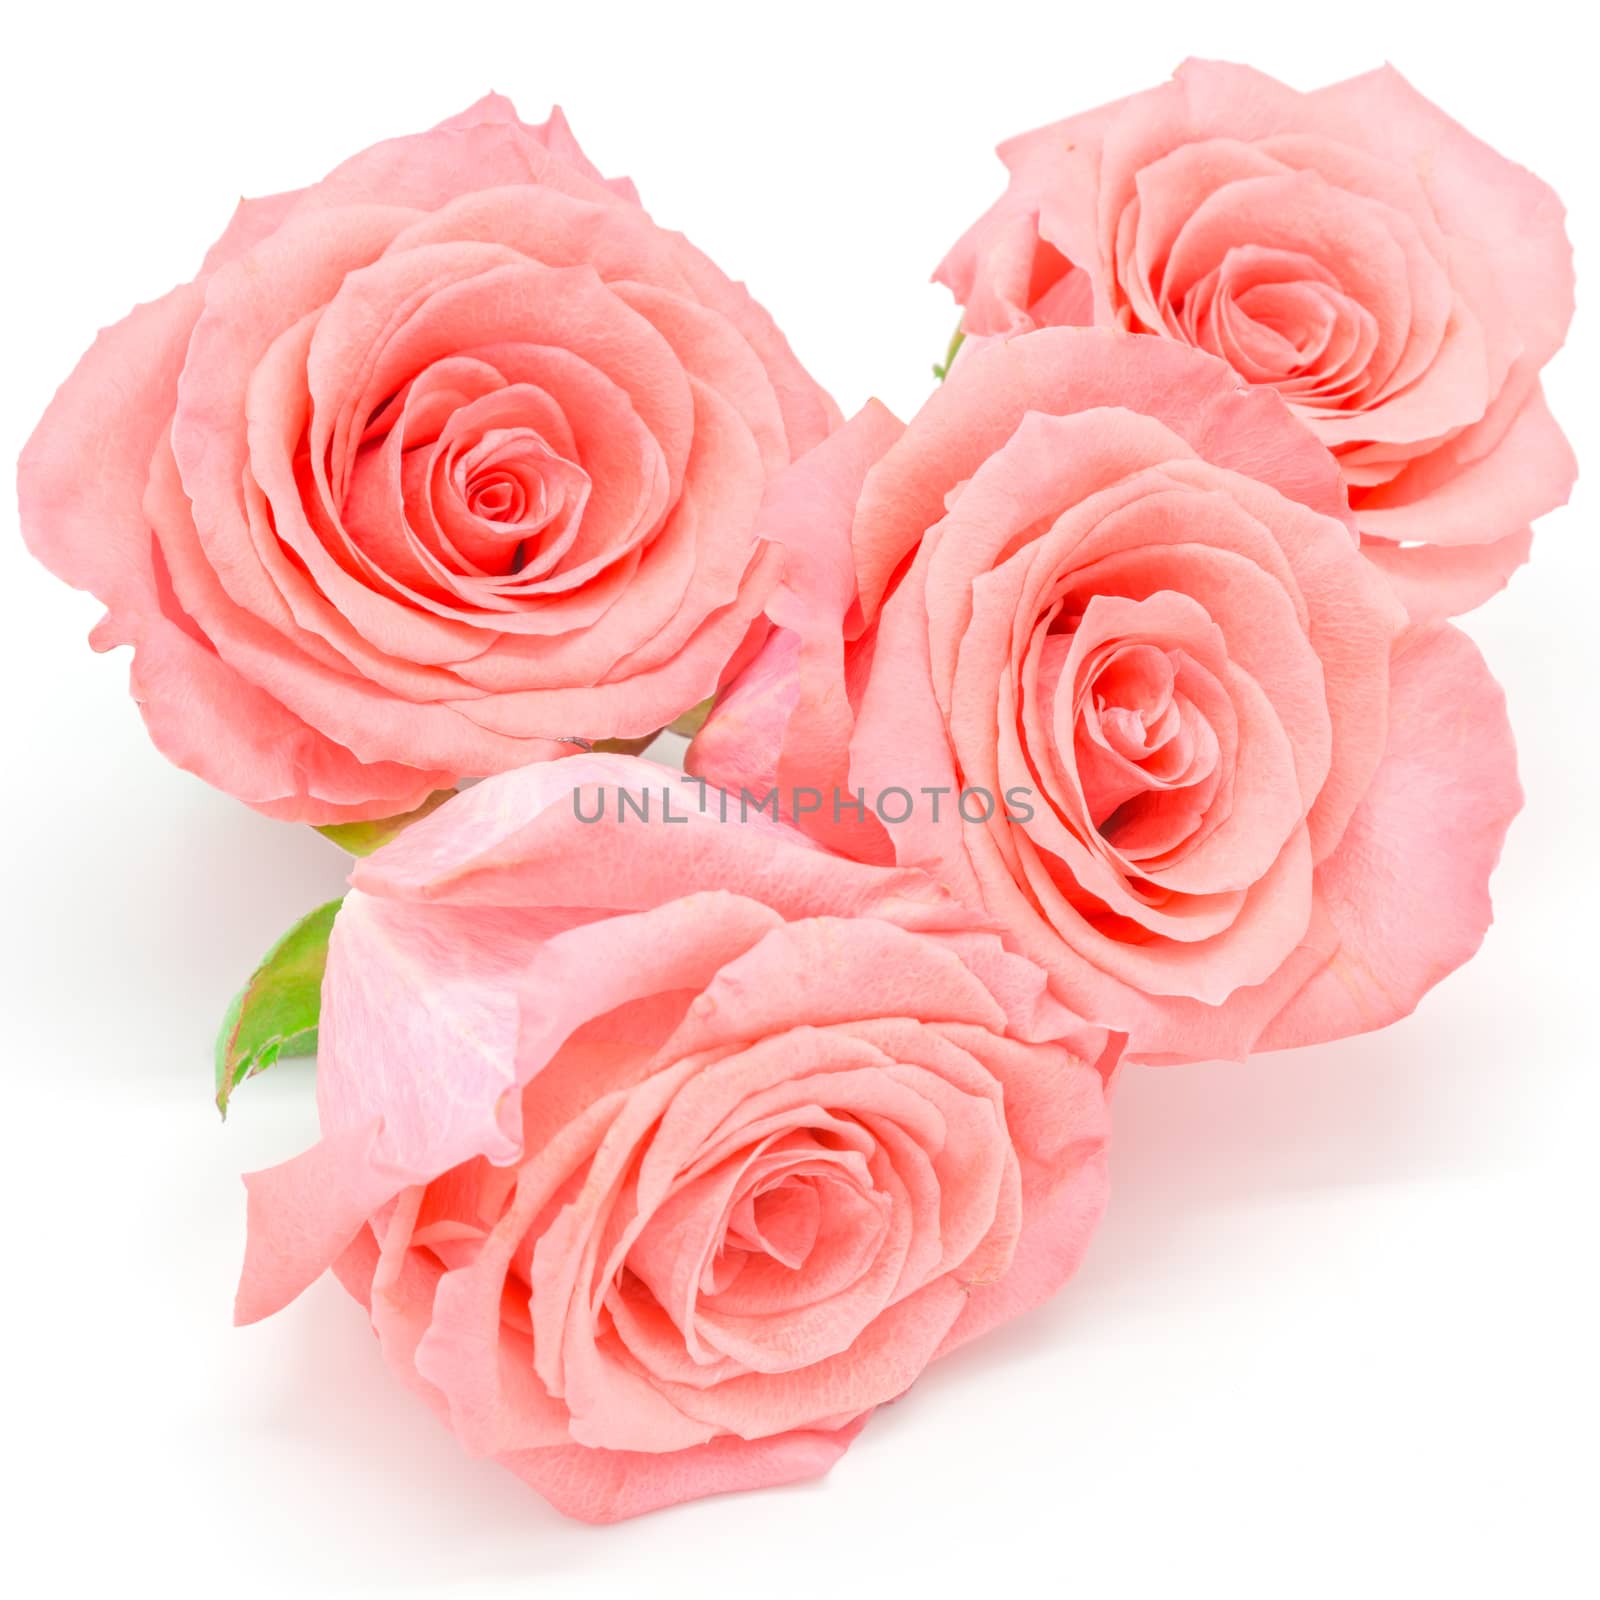 pale pink rose by panuruangjan